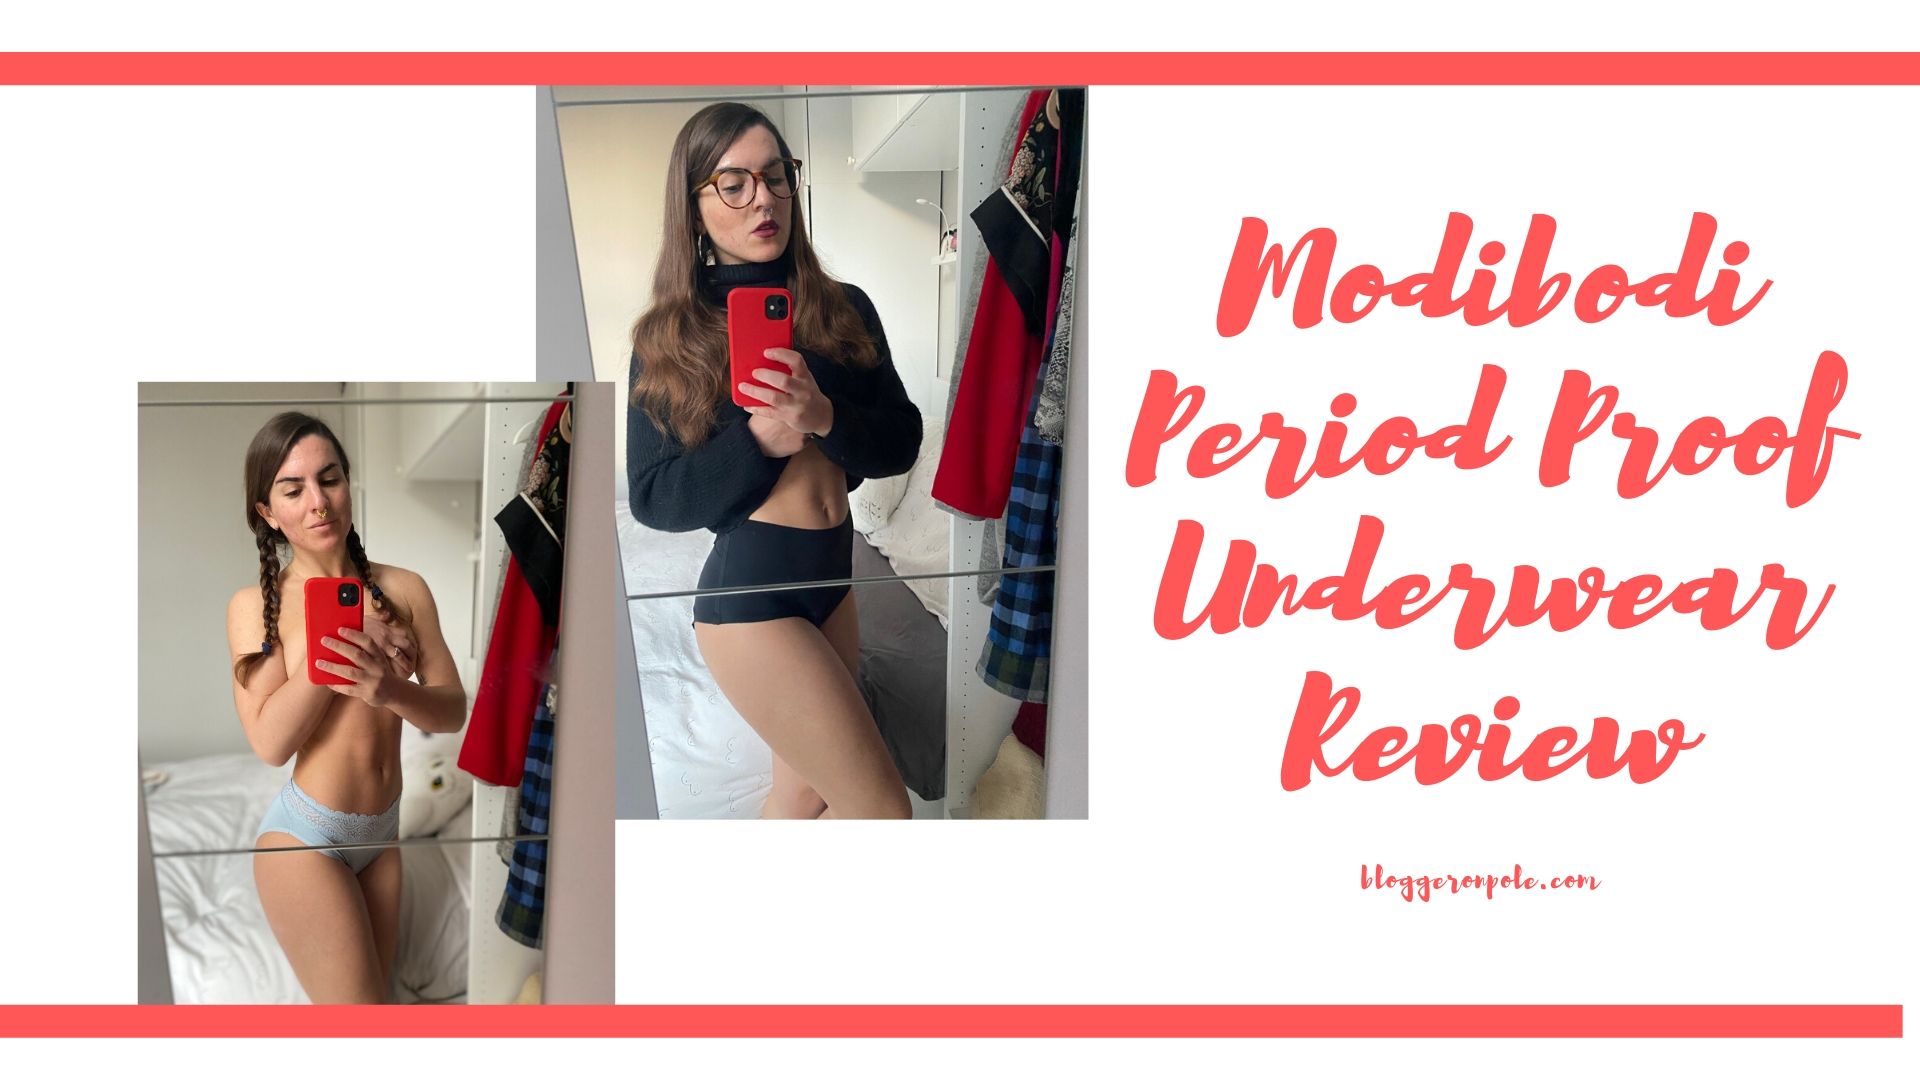 https://bloggeronpole.com/wp-content/uploads/2020/01/Modibodi-Period-Proof-Underwear-Review.jpg